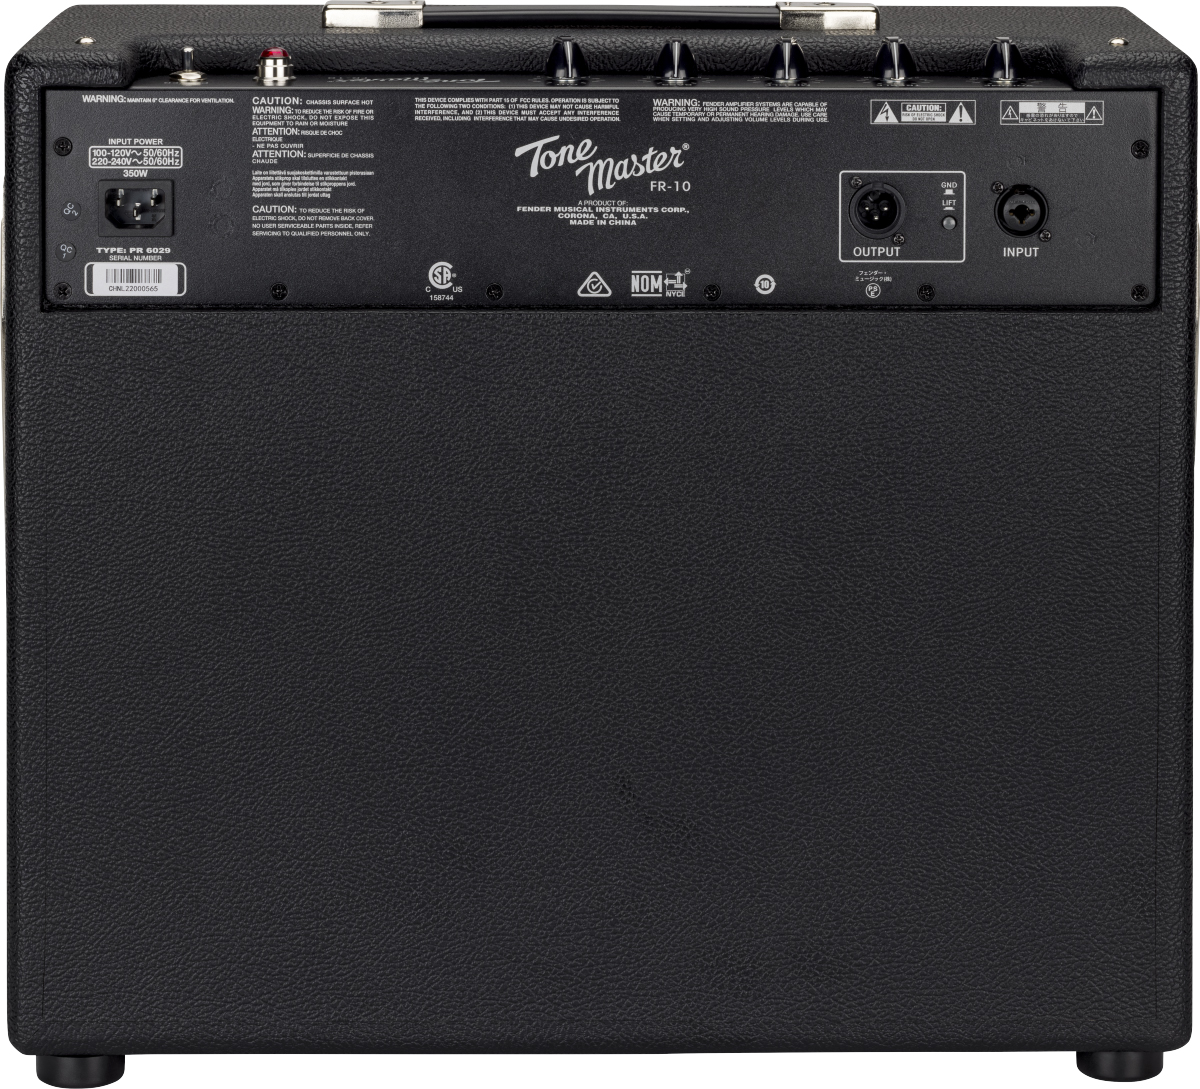 Fender Tone Master Fr-10 Powered Speaker Cab 1x10 1000w - Ampli Guitare Électrique Combo - Variation 1